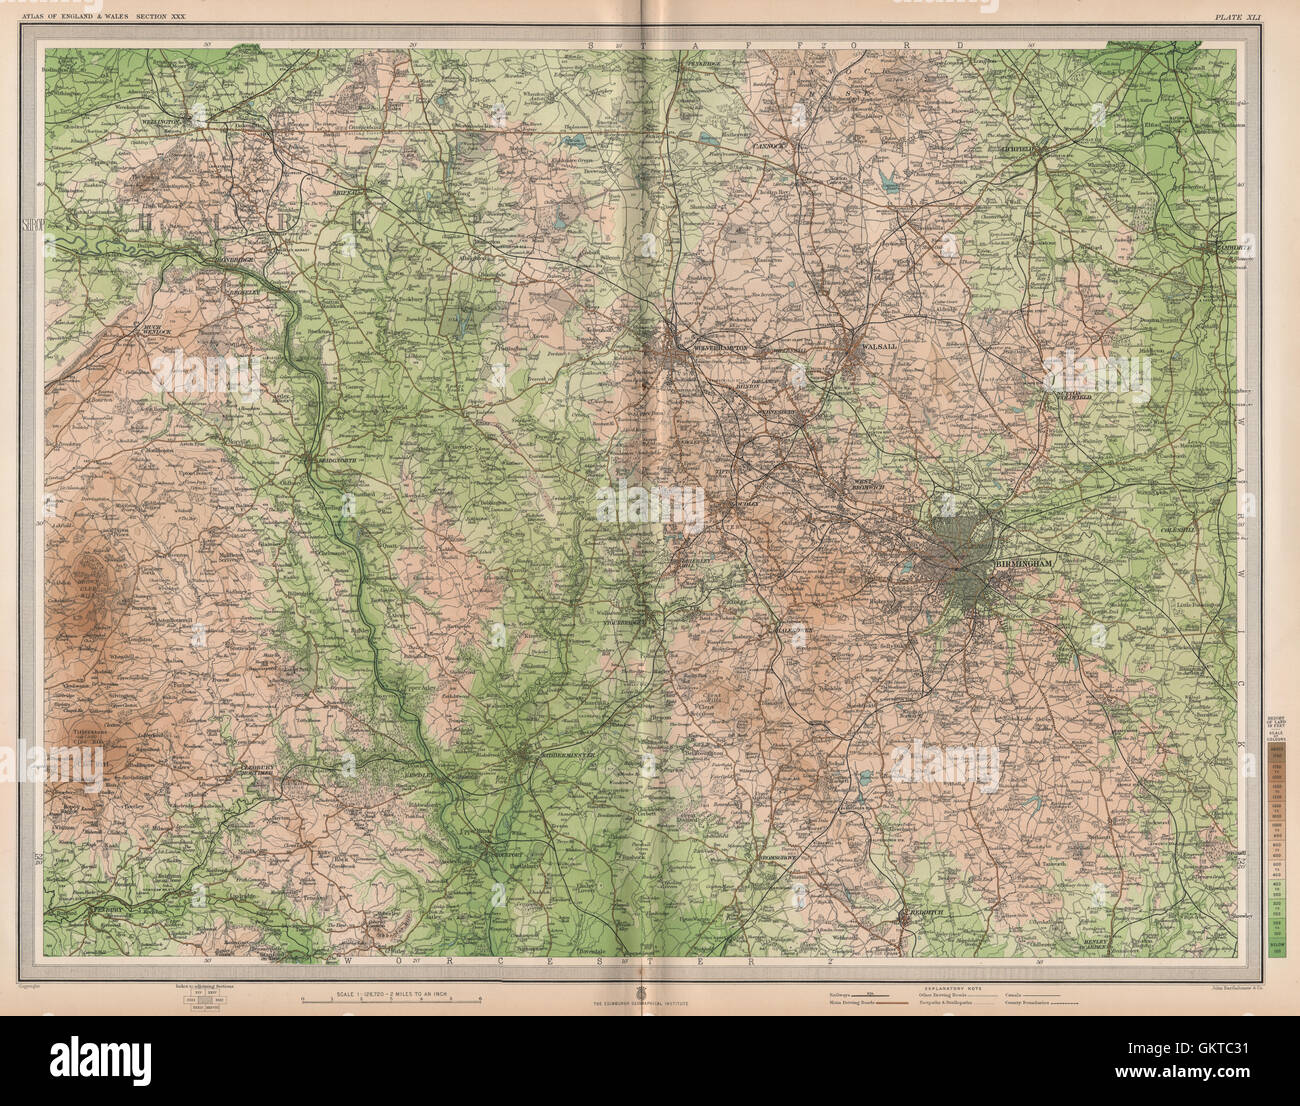 W MIDLANDS/SEVERN VALLEY. Birmingham Shropshire Hills Wolverhampton, 1903 map Stock Photo